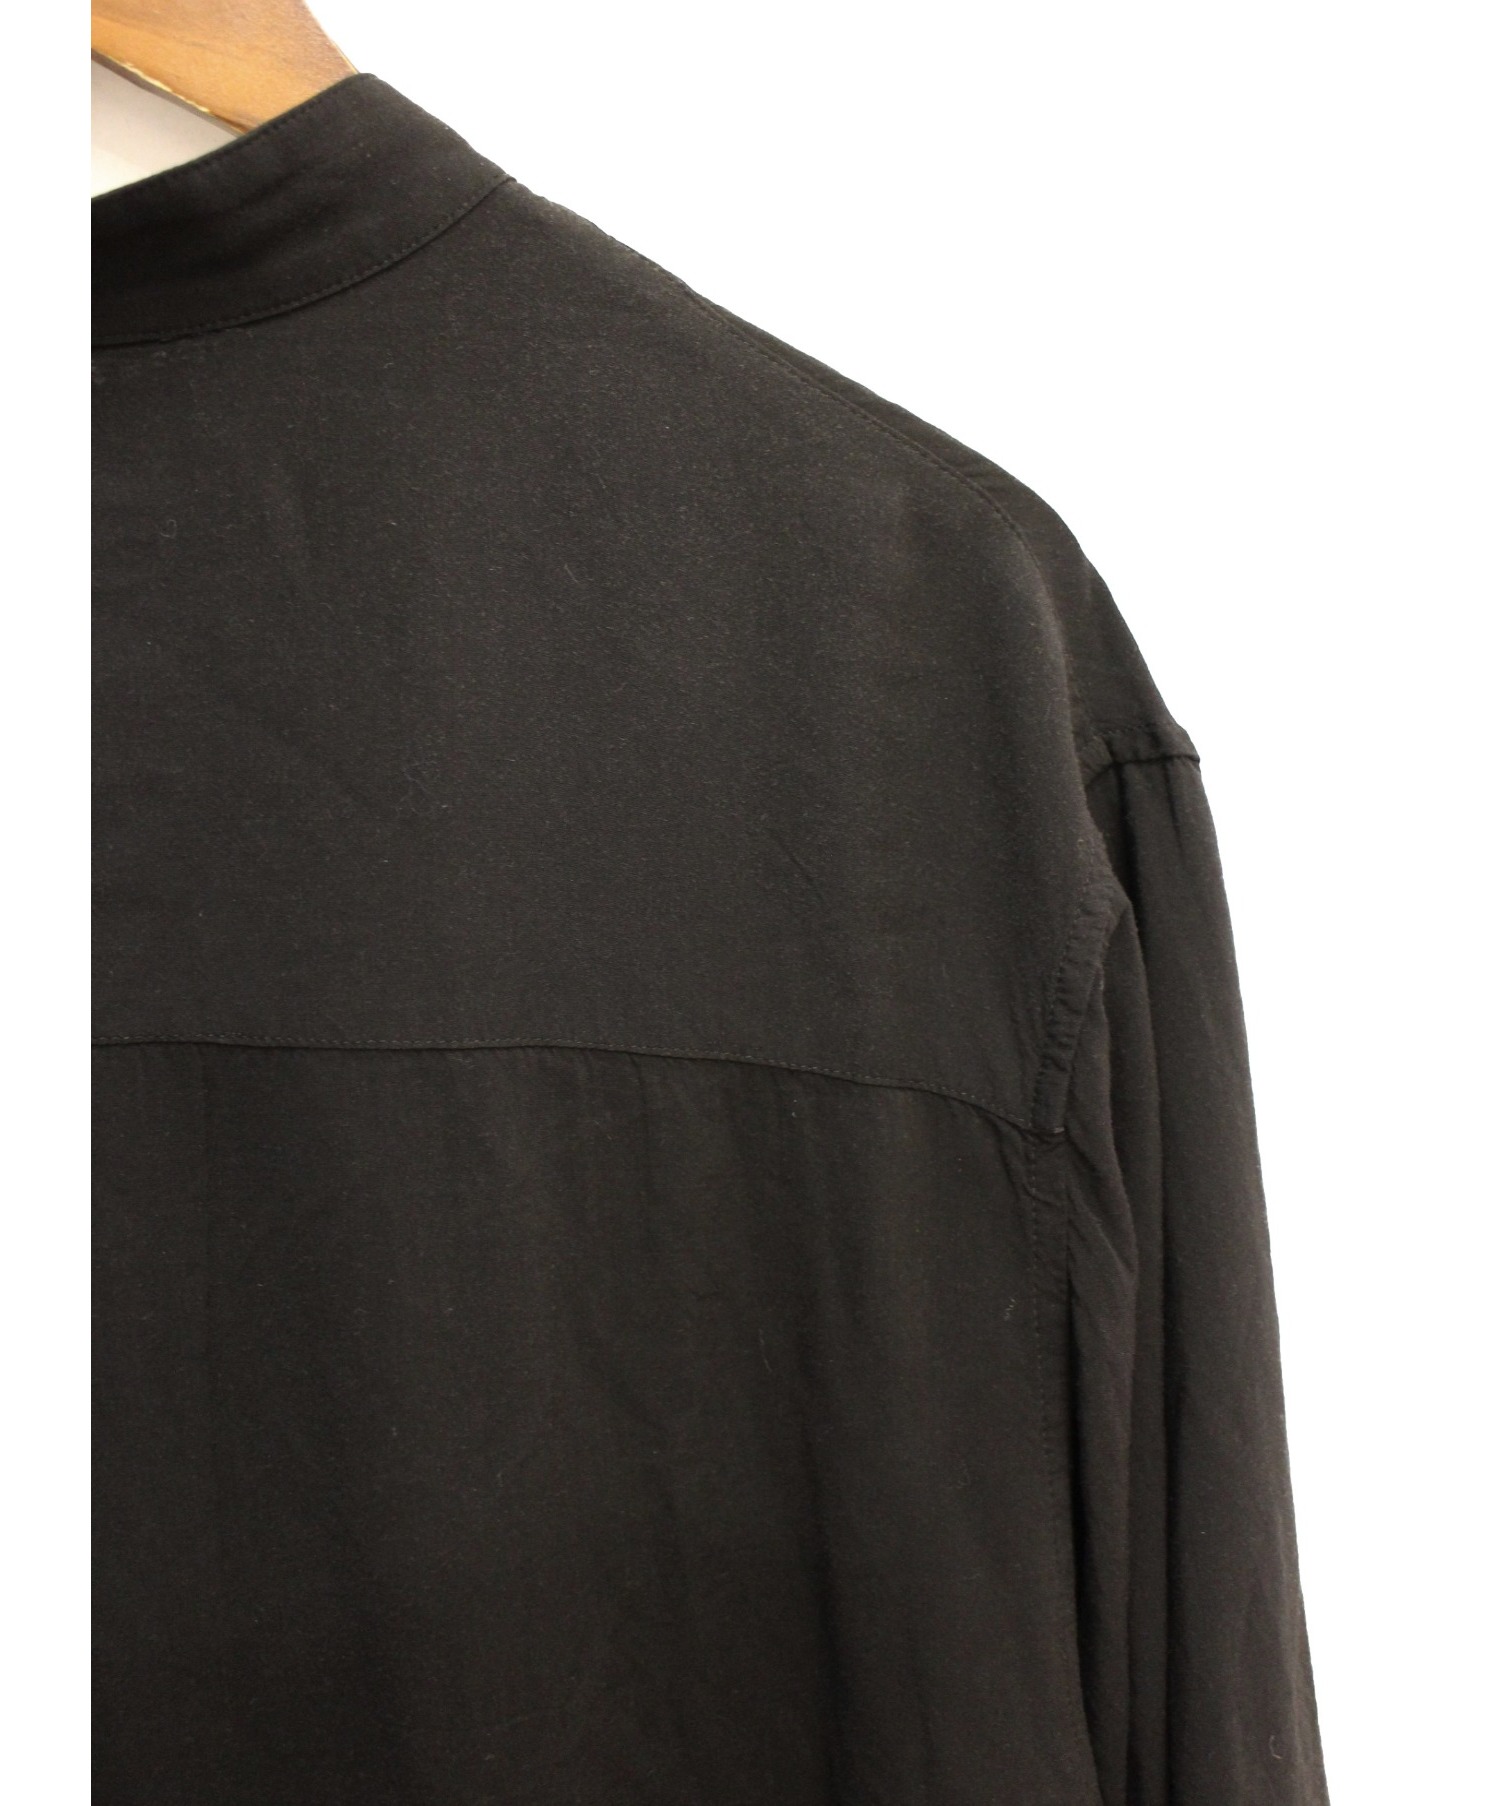 Yohji Yamamoto pour homme (ヨウジヤマモトプールオム) 20SS UCHIDA Print long shirt ブラック  サイズ:1